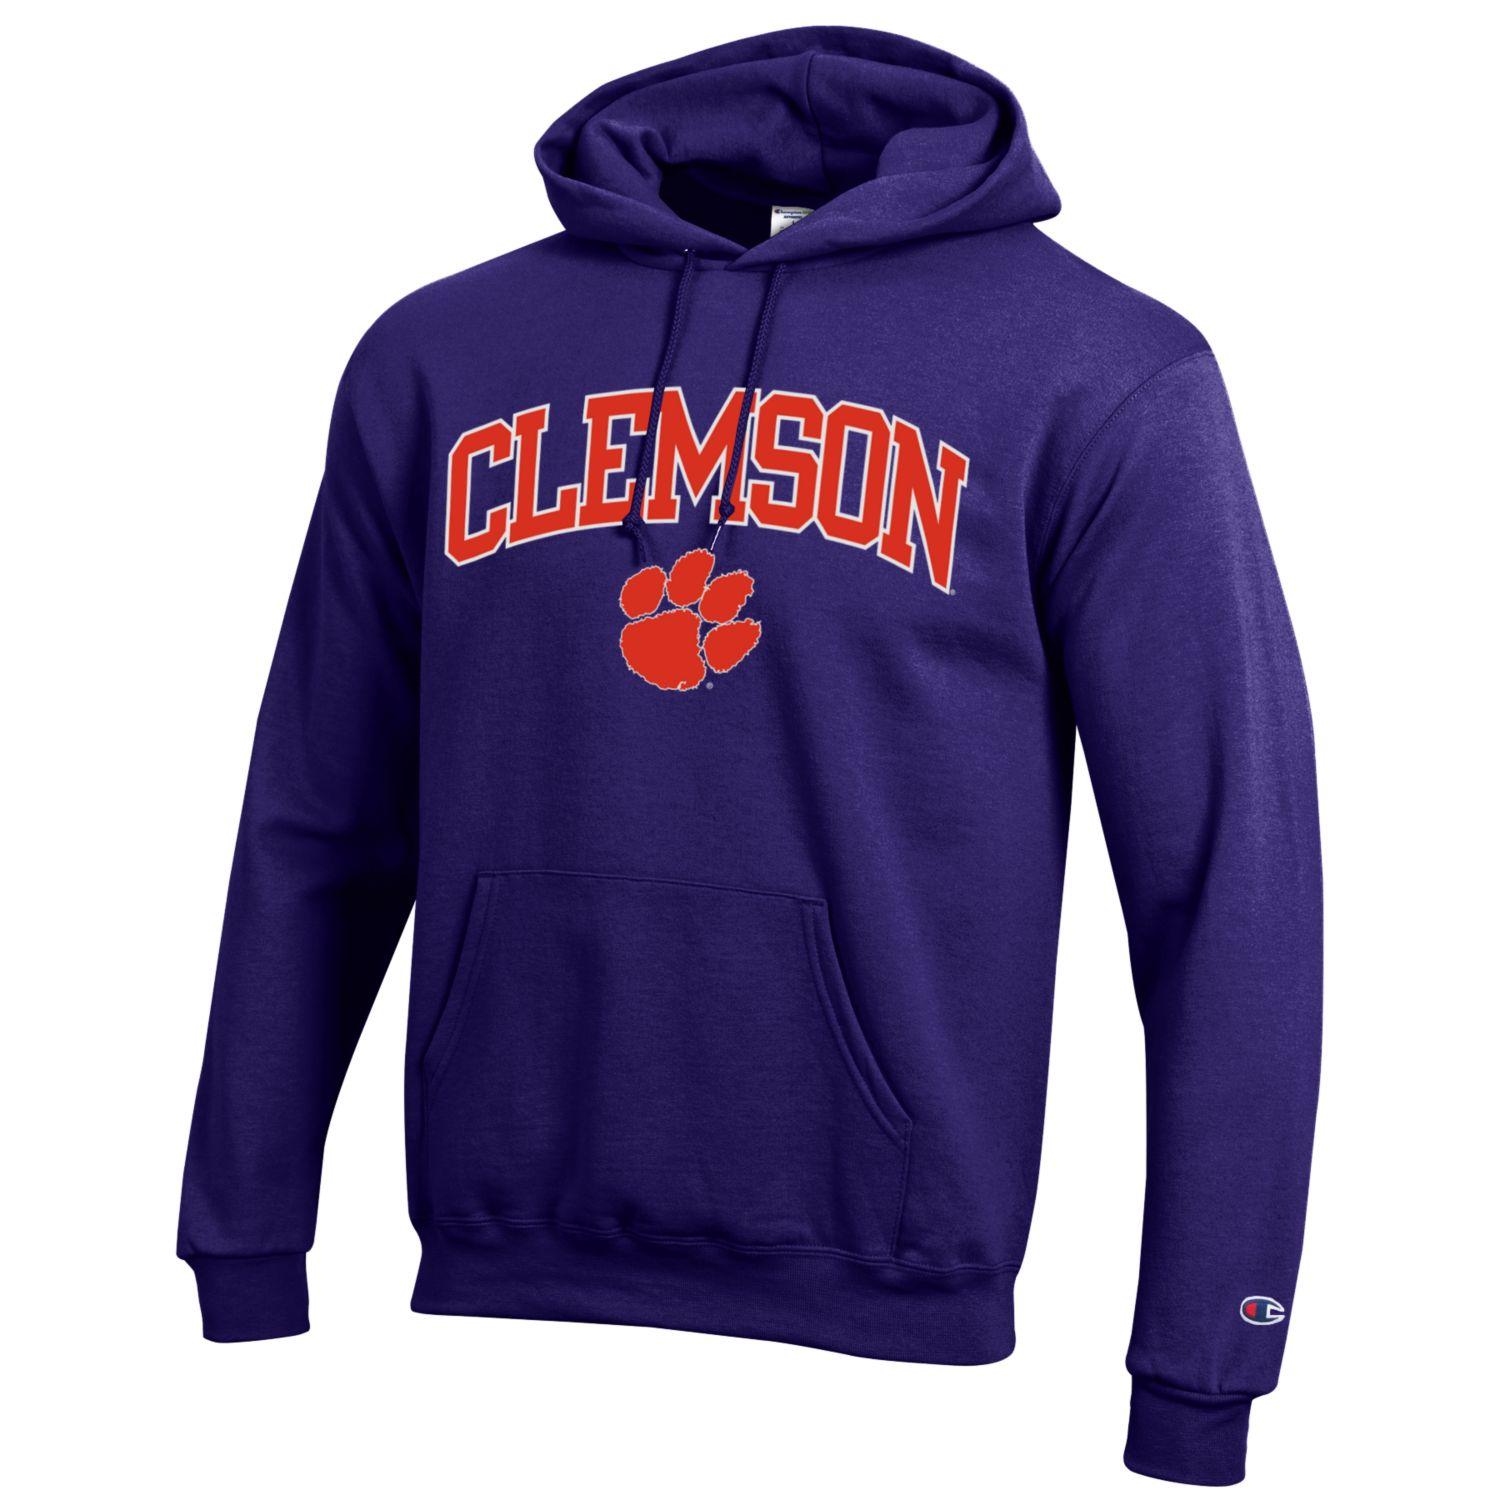 Clemson University Hooded Sweatshirt, Purple